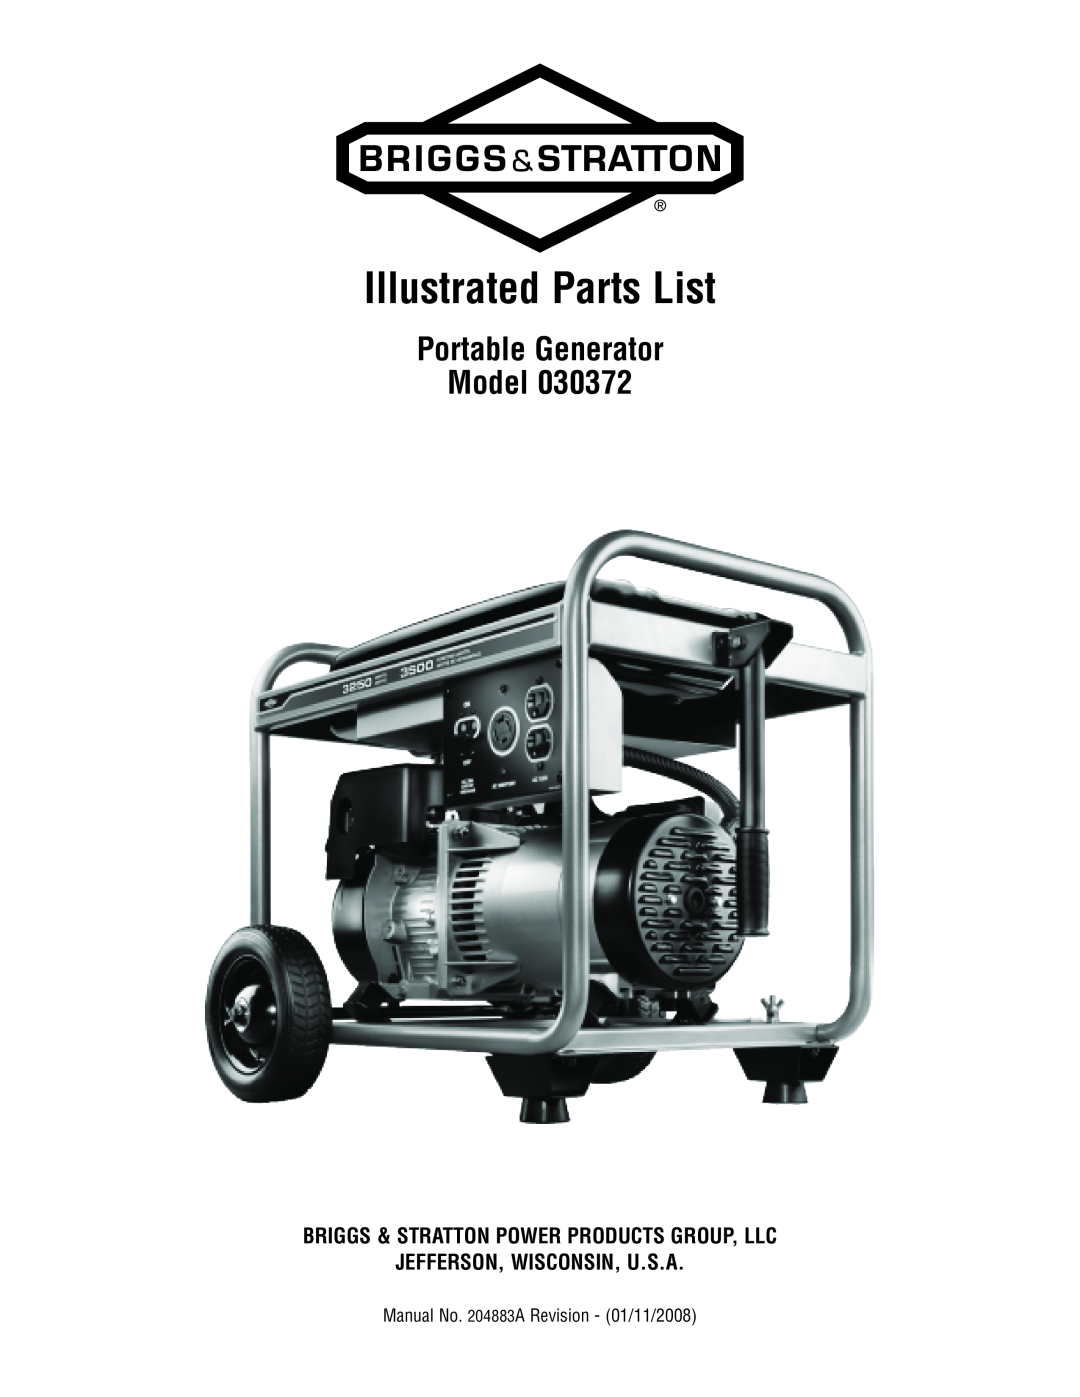 Briggs & Stratton 30372 manual Portable Generator Model, Illustrated Parts List, Jefferson, Wisconsin, U.S.A 